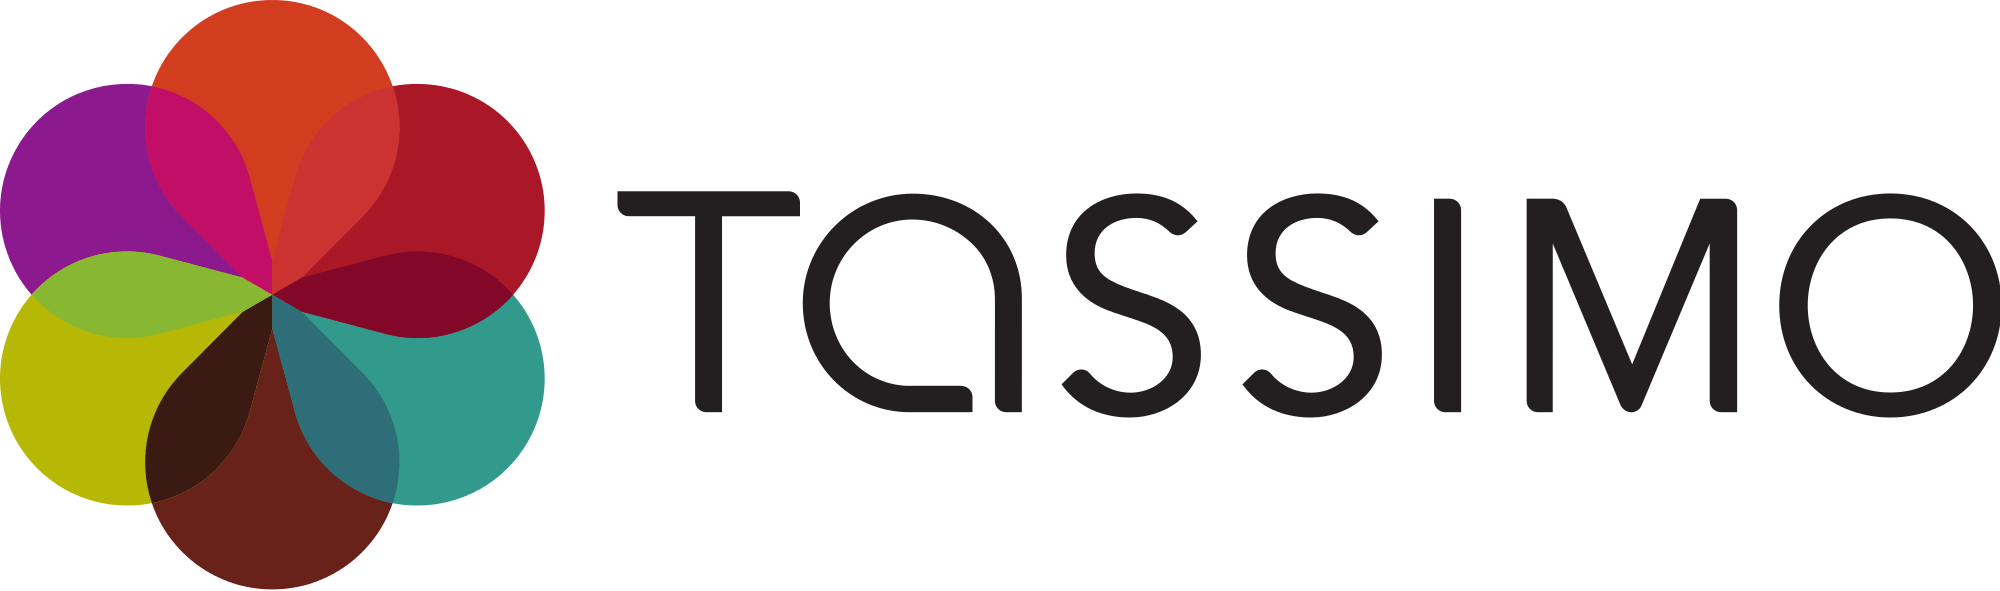 Tassimo Logo - File:Tassimo Logo neu.svg - Wikimedia Commons